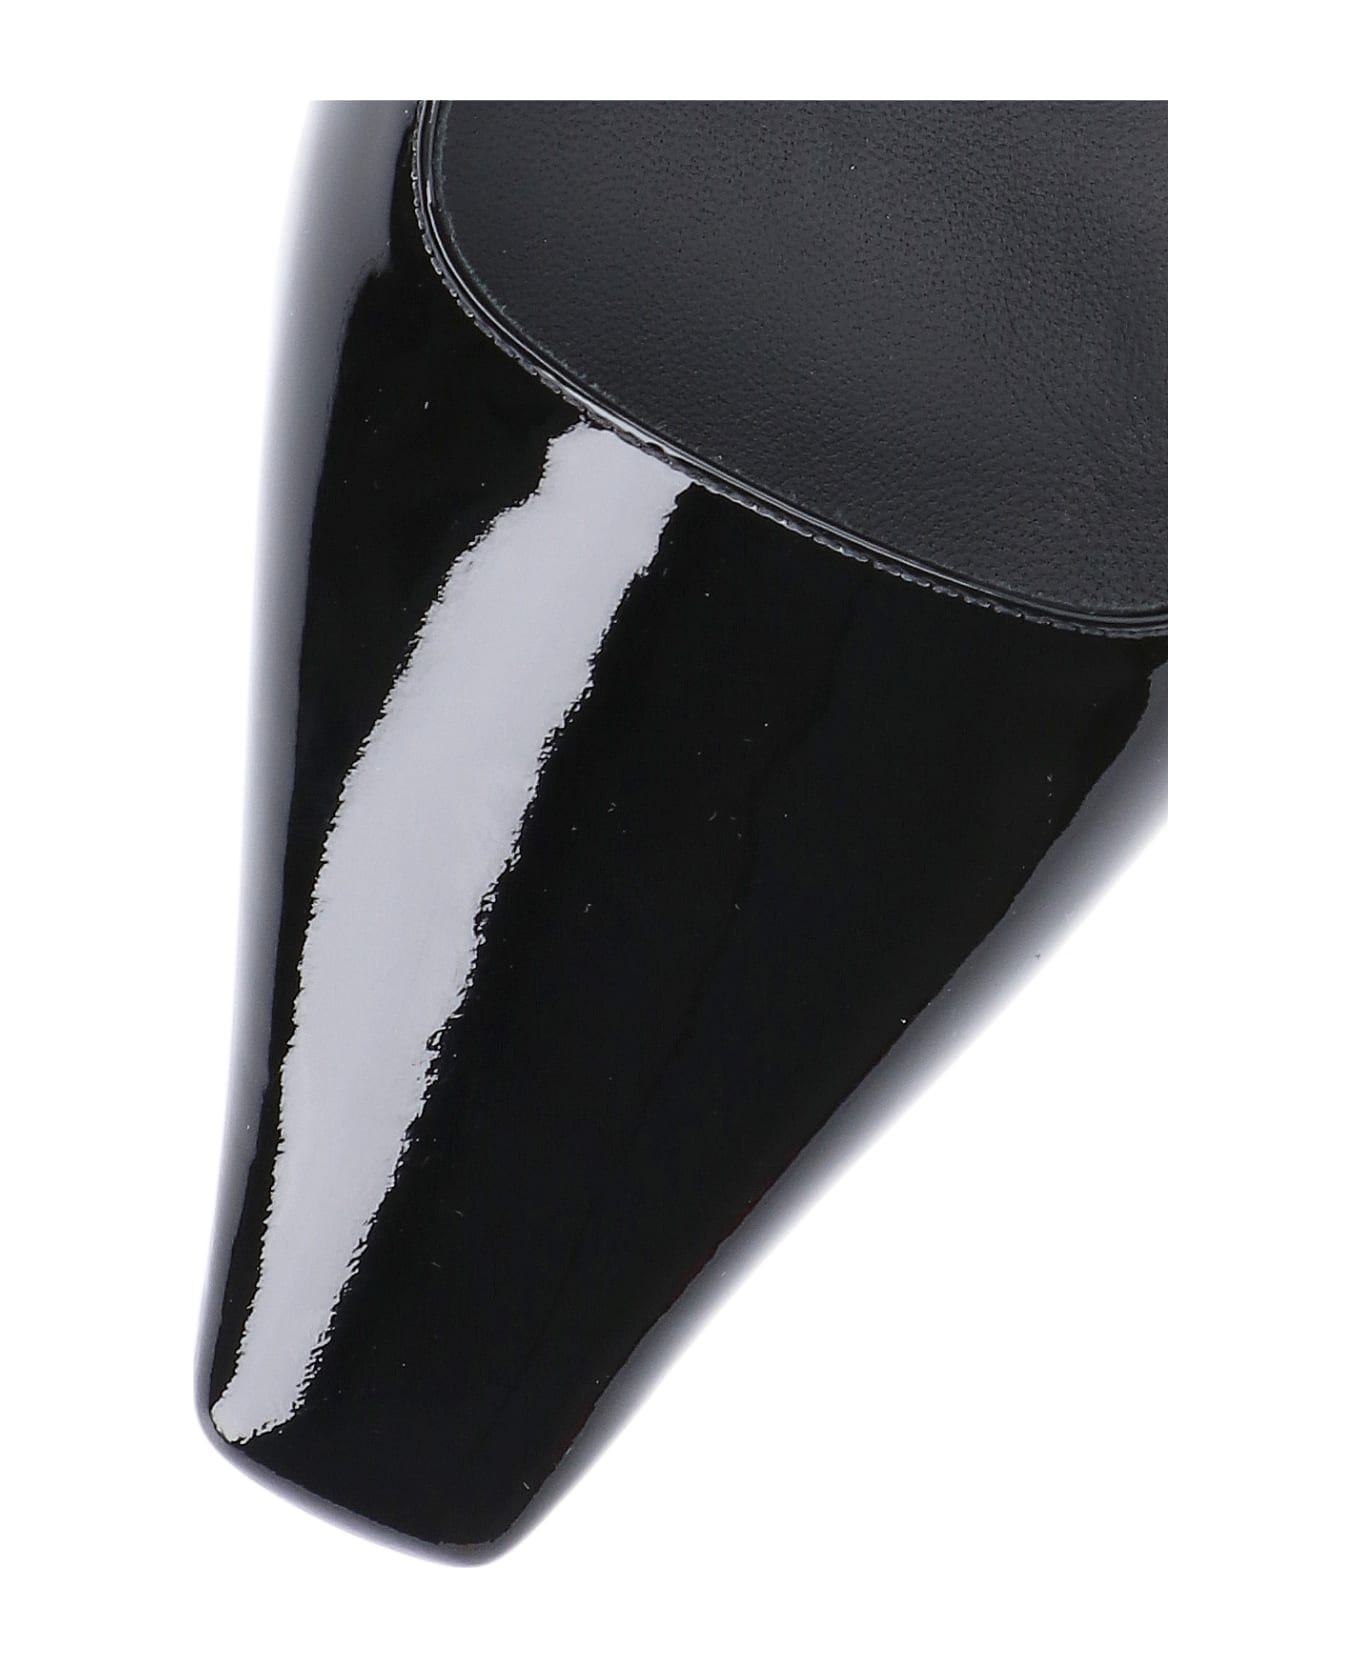 3JUIN High-heeled shoe - Black